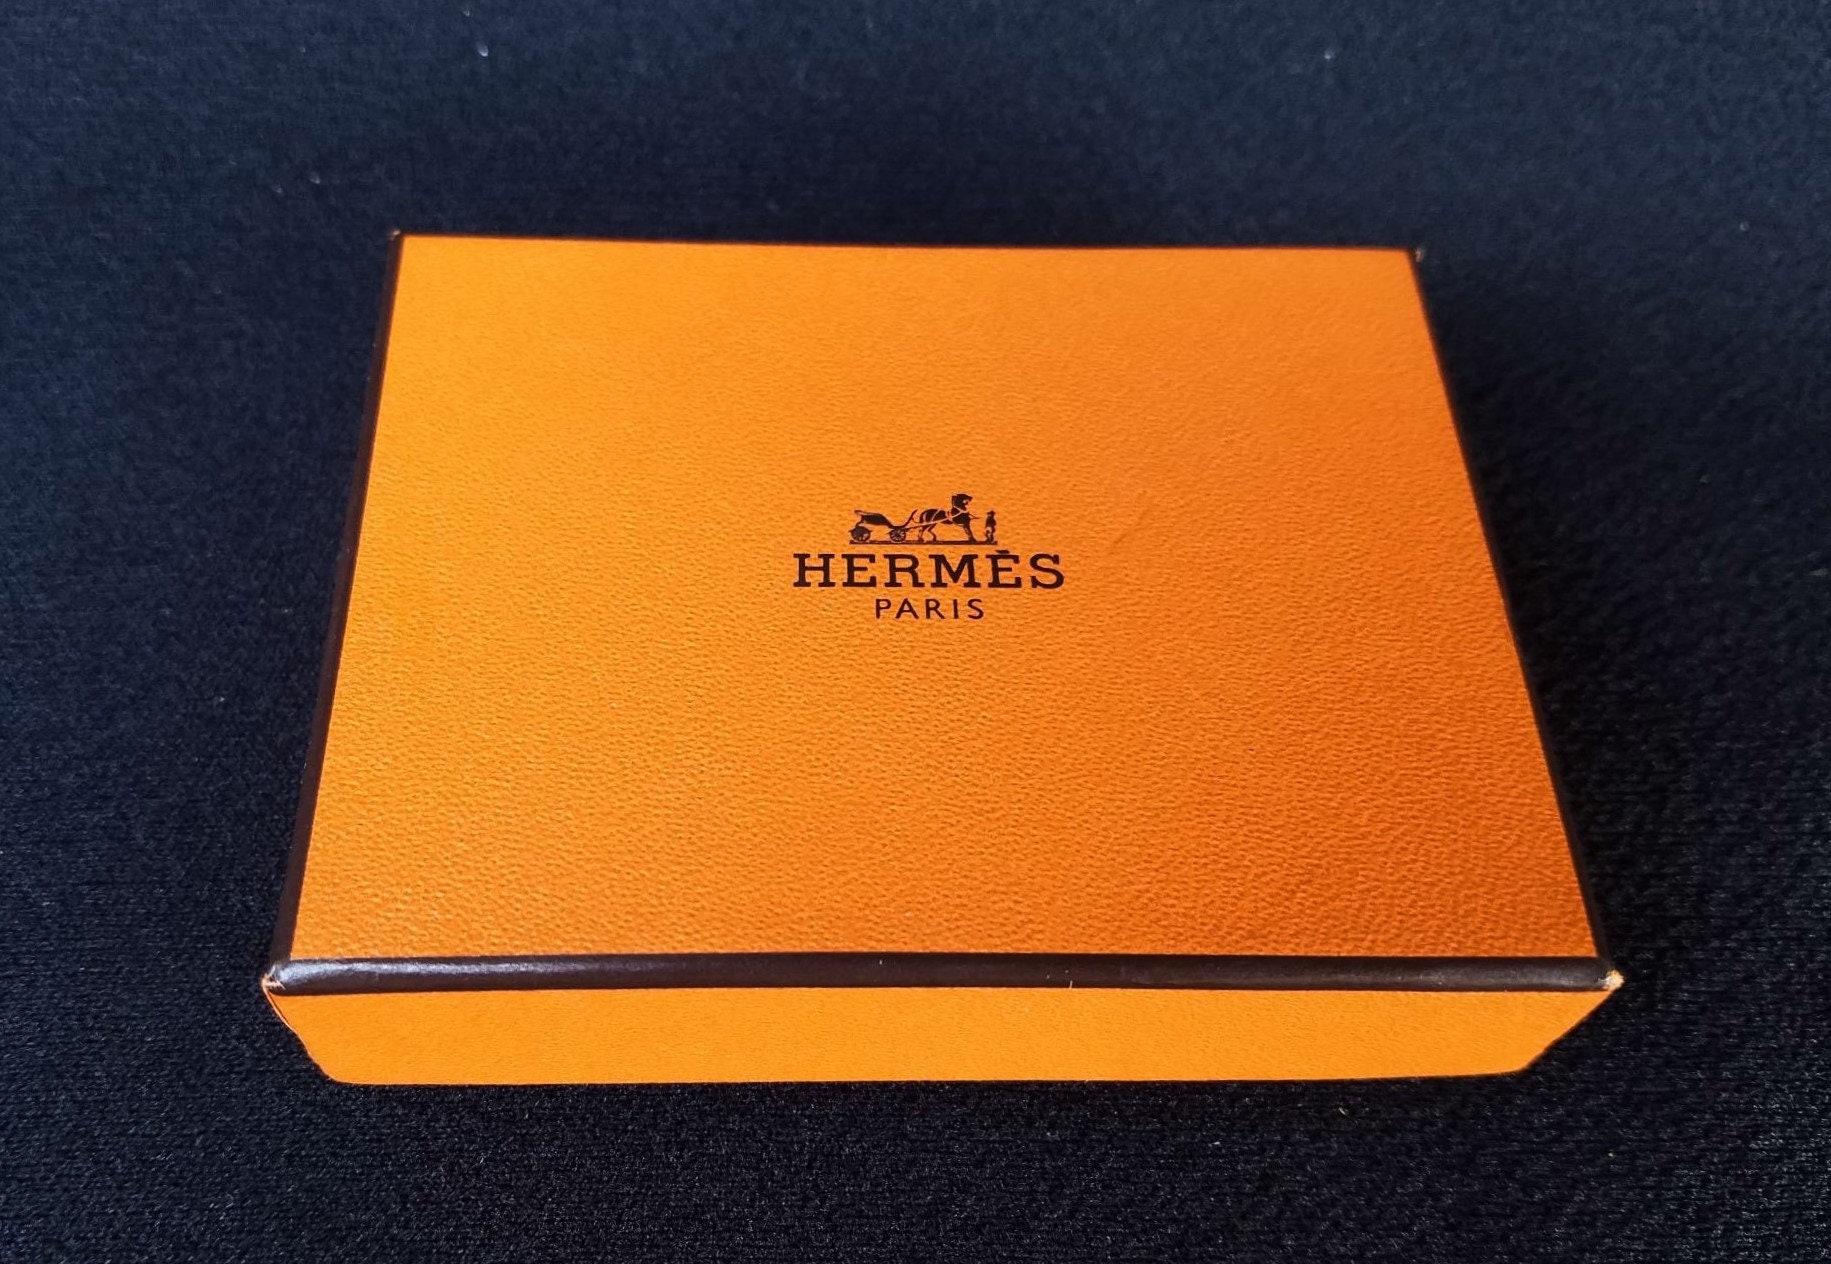 Hermes Gift Box-Pinata Smash – Complete Deelite